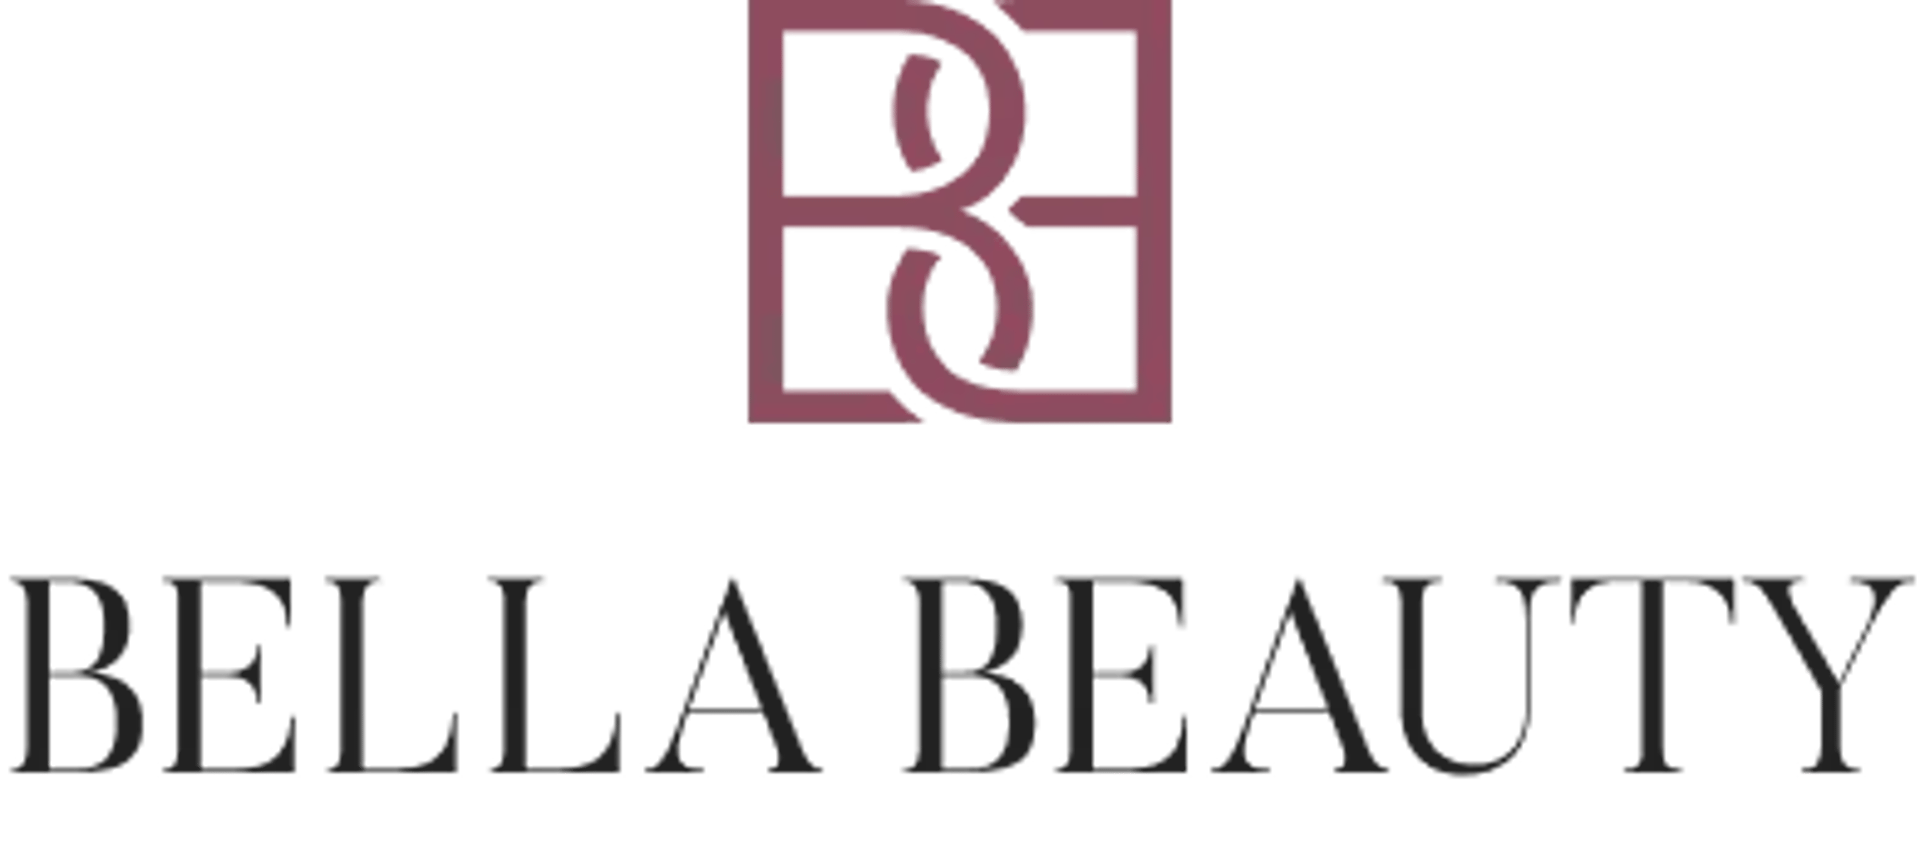 Bella Beauty - Aesthetic Medical Clinic WordPress Theme Logo | CMSMasters studio